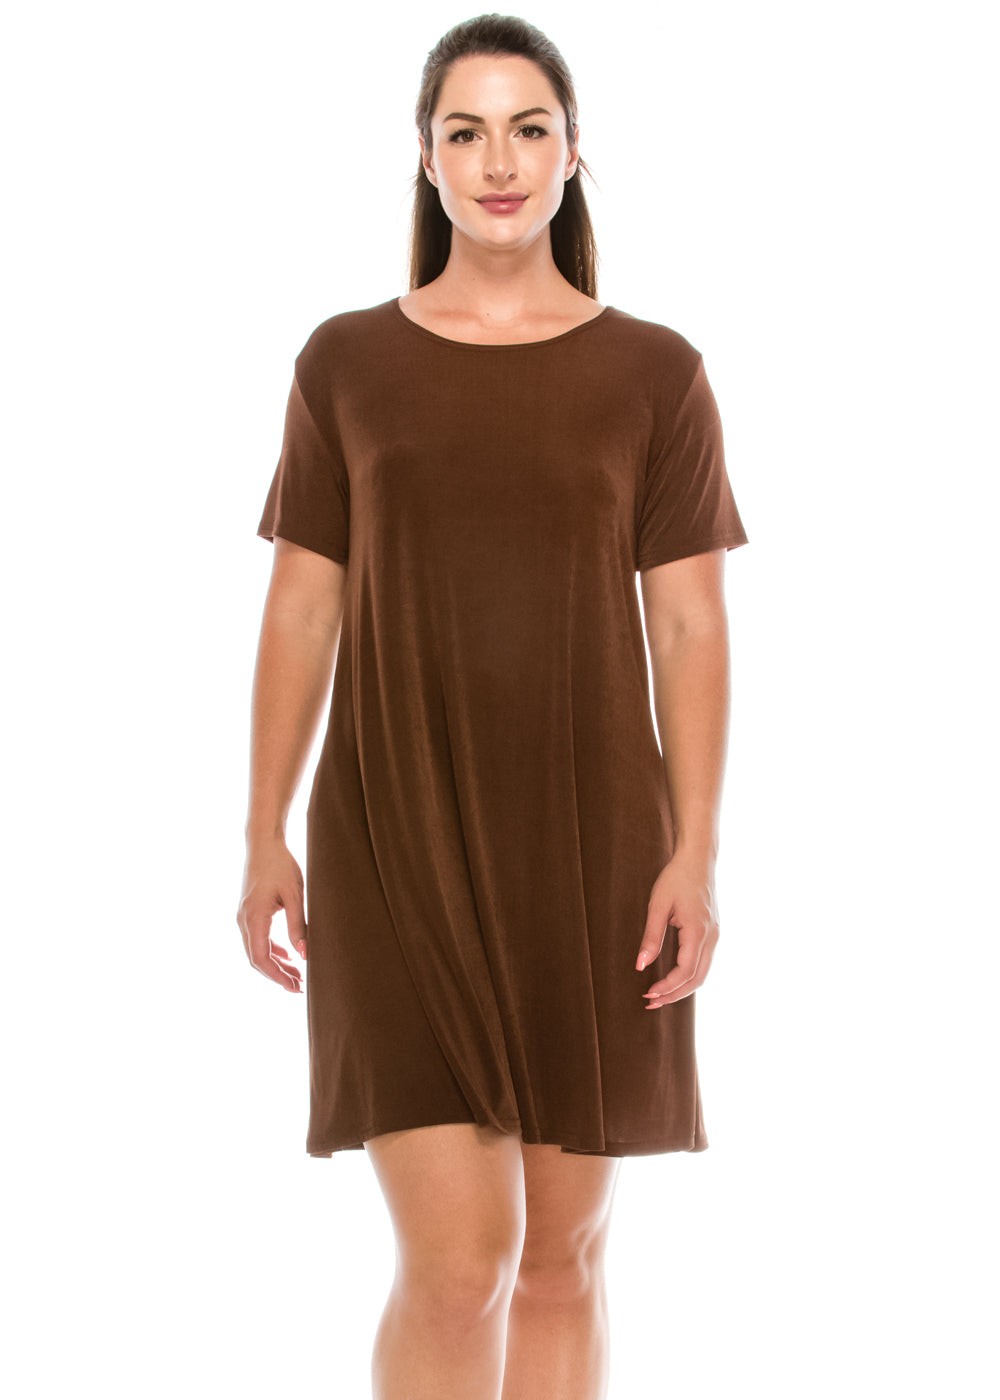 Jostar Women's Stretchy Missy Dress Short Sleeve, 704BN-S - Jostar Online